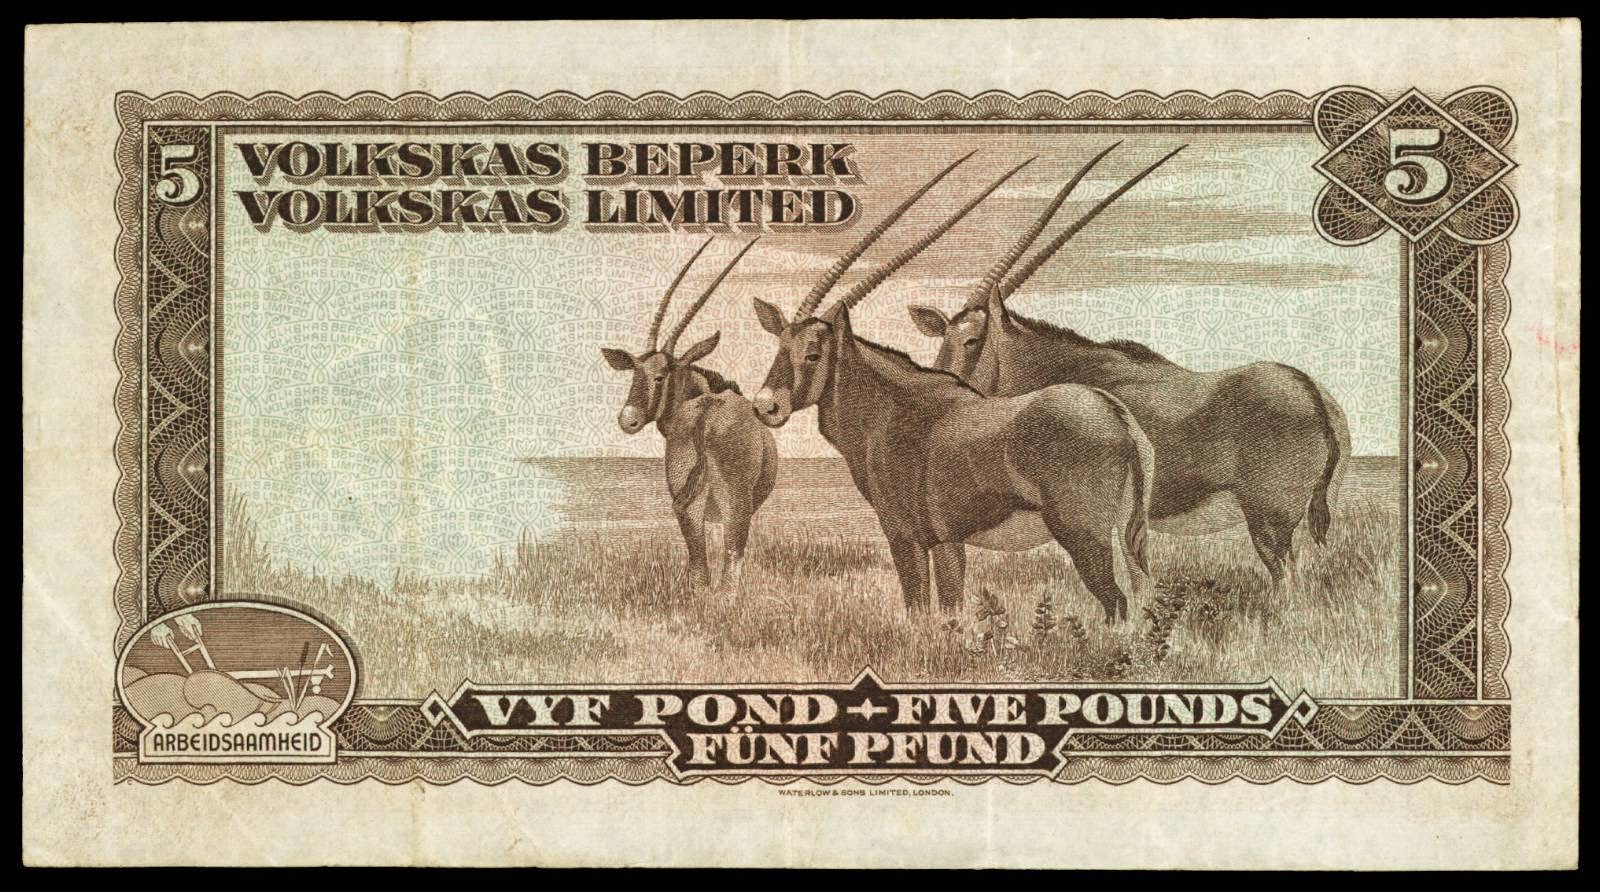 South West Africa 5 pound note 1959 Volkskas